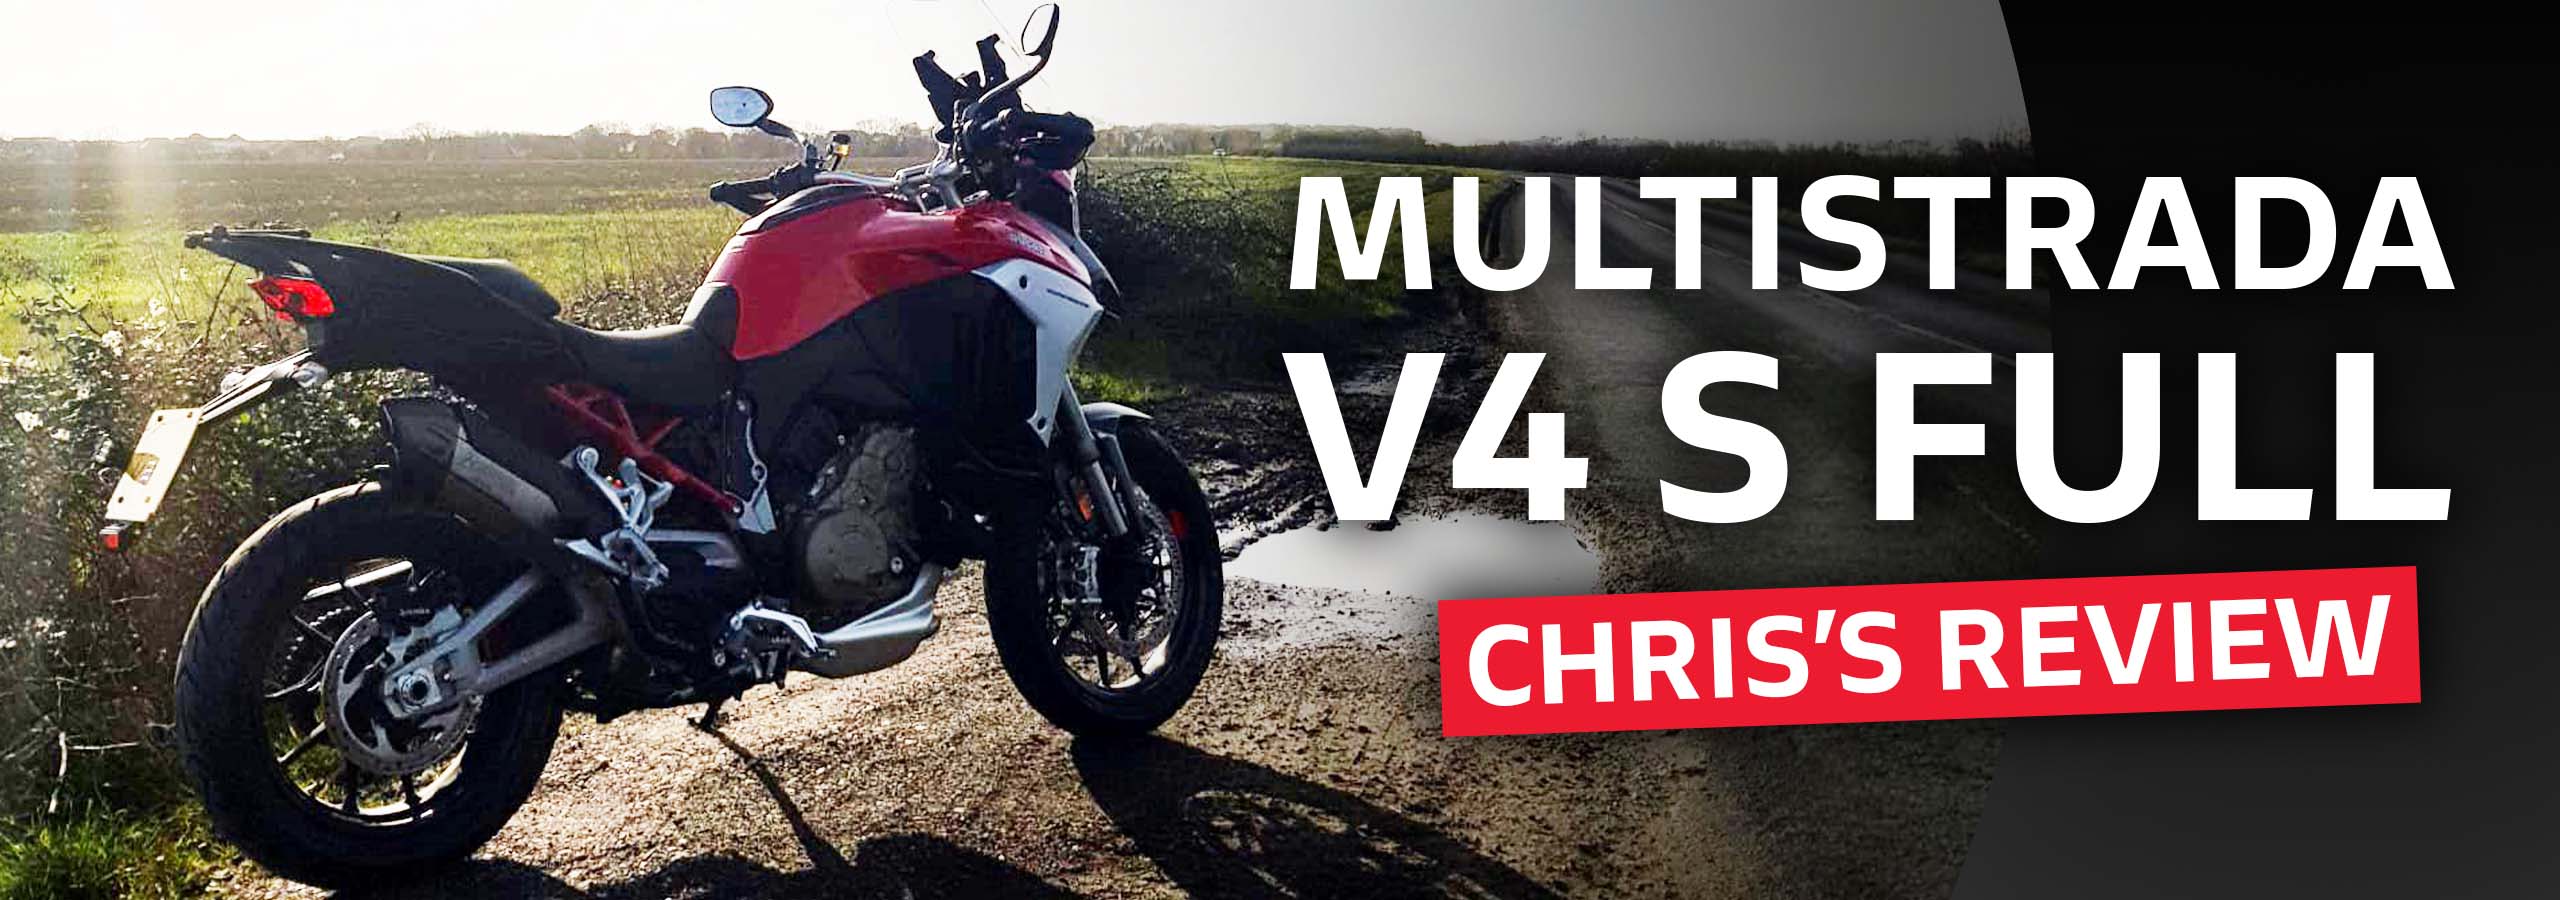 Chris reviews the Ducati Multistrada V4 S Full at Laguna Motorcycles in Ashford